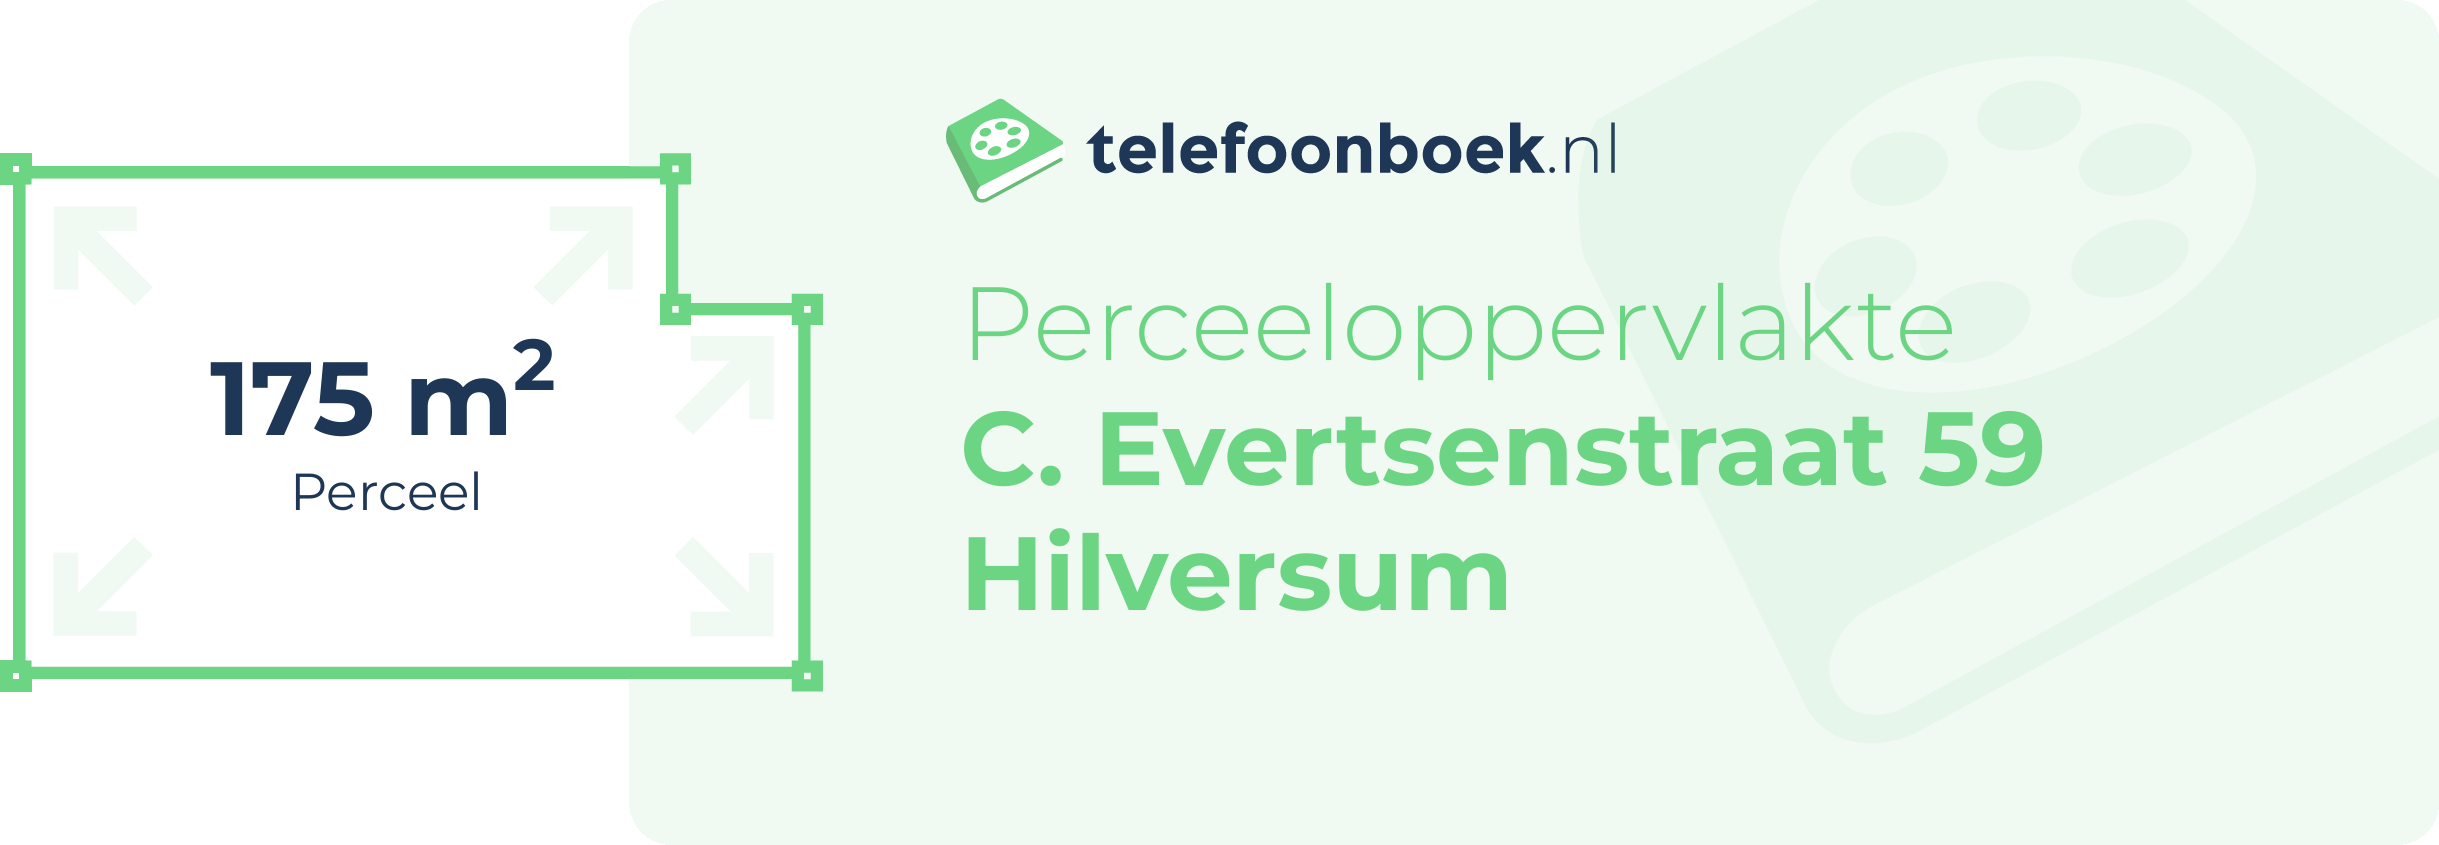 Perceeloppervlakte C. Evertsenstraat 59 Hilversum